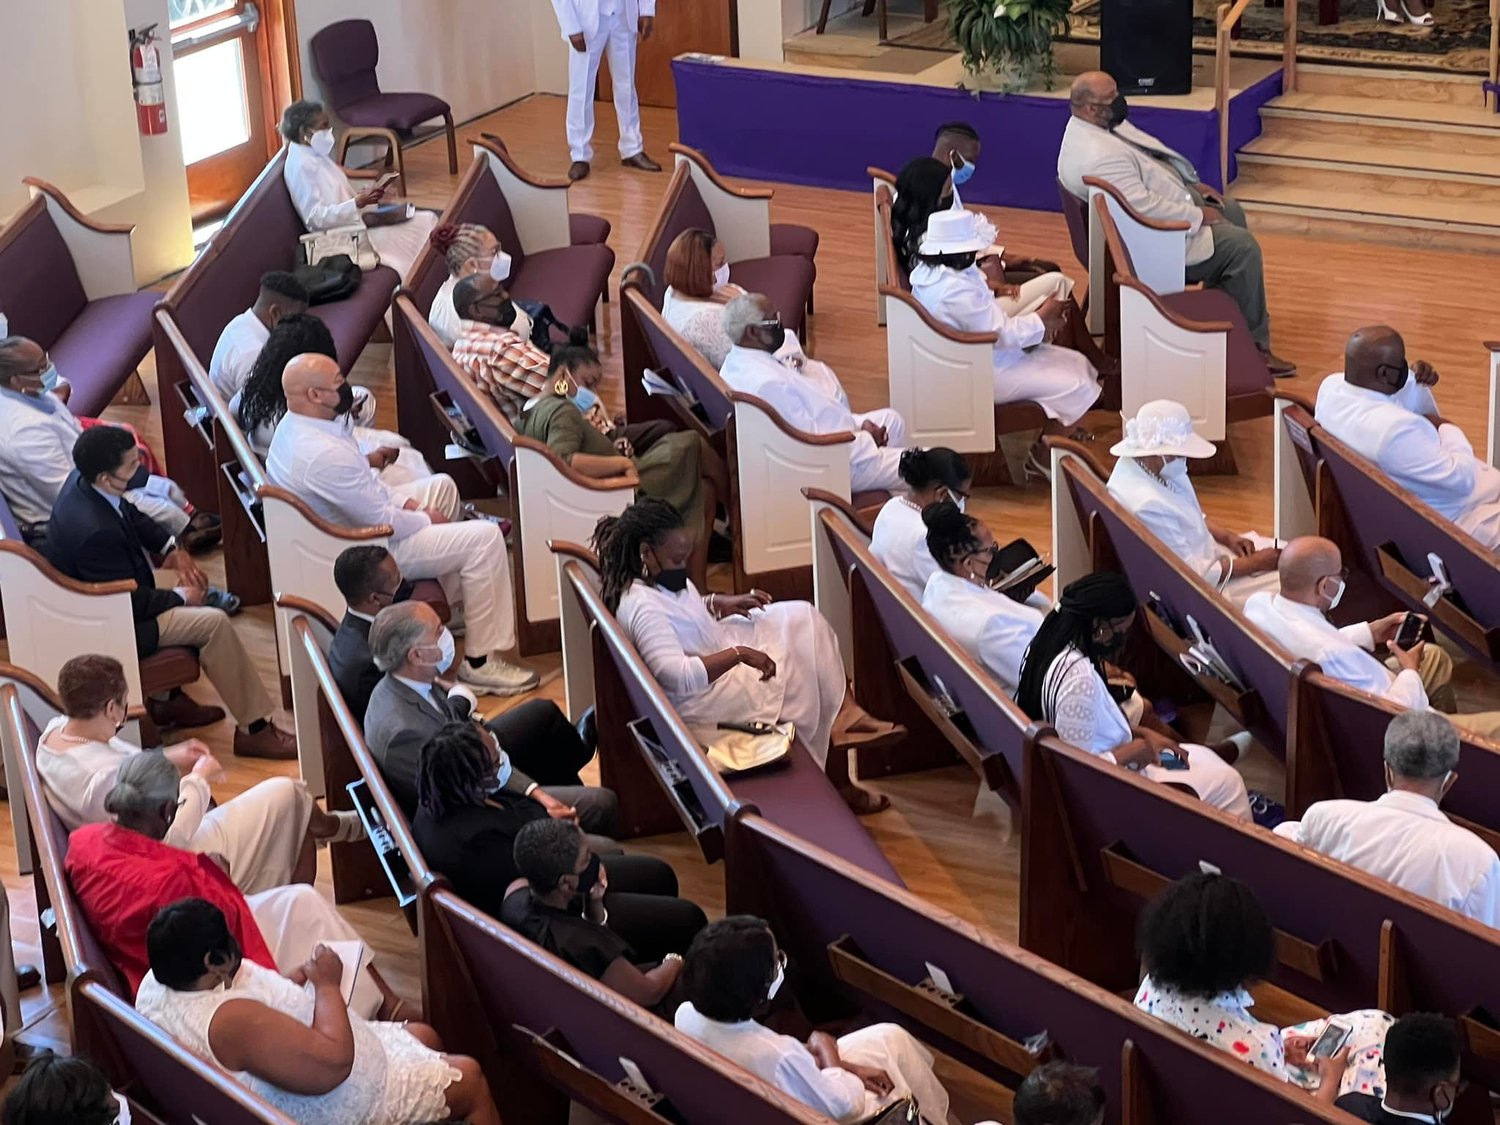 The Second Baptist Church of Baldwin congregation listened to Rev. Al Sharpton’s sermon “An Unseasonal God” June 5.